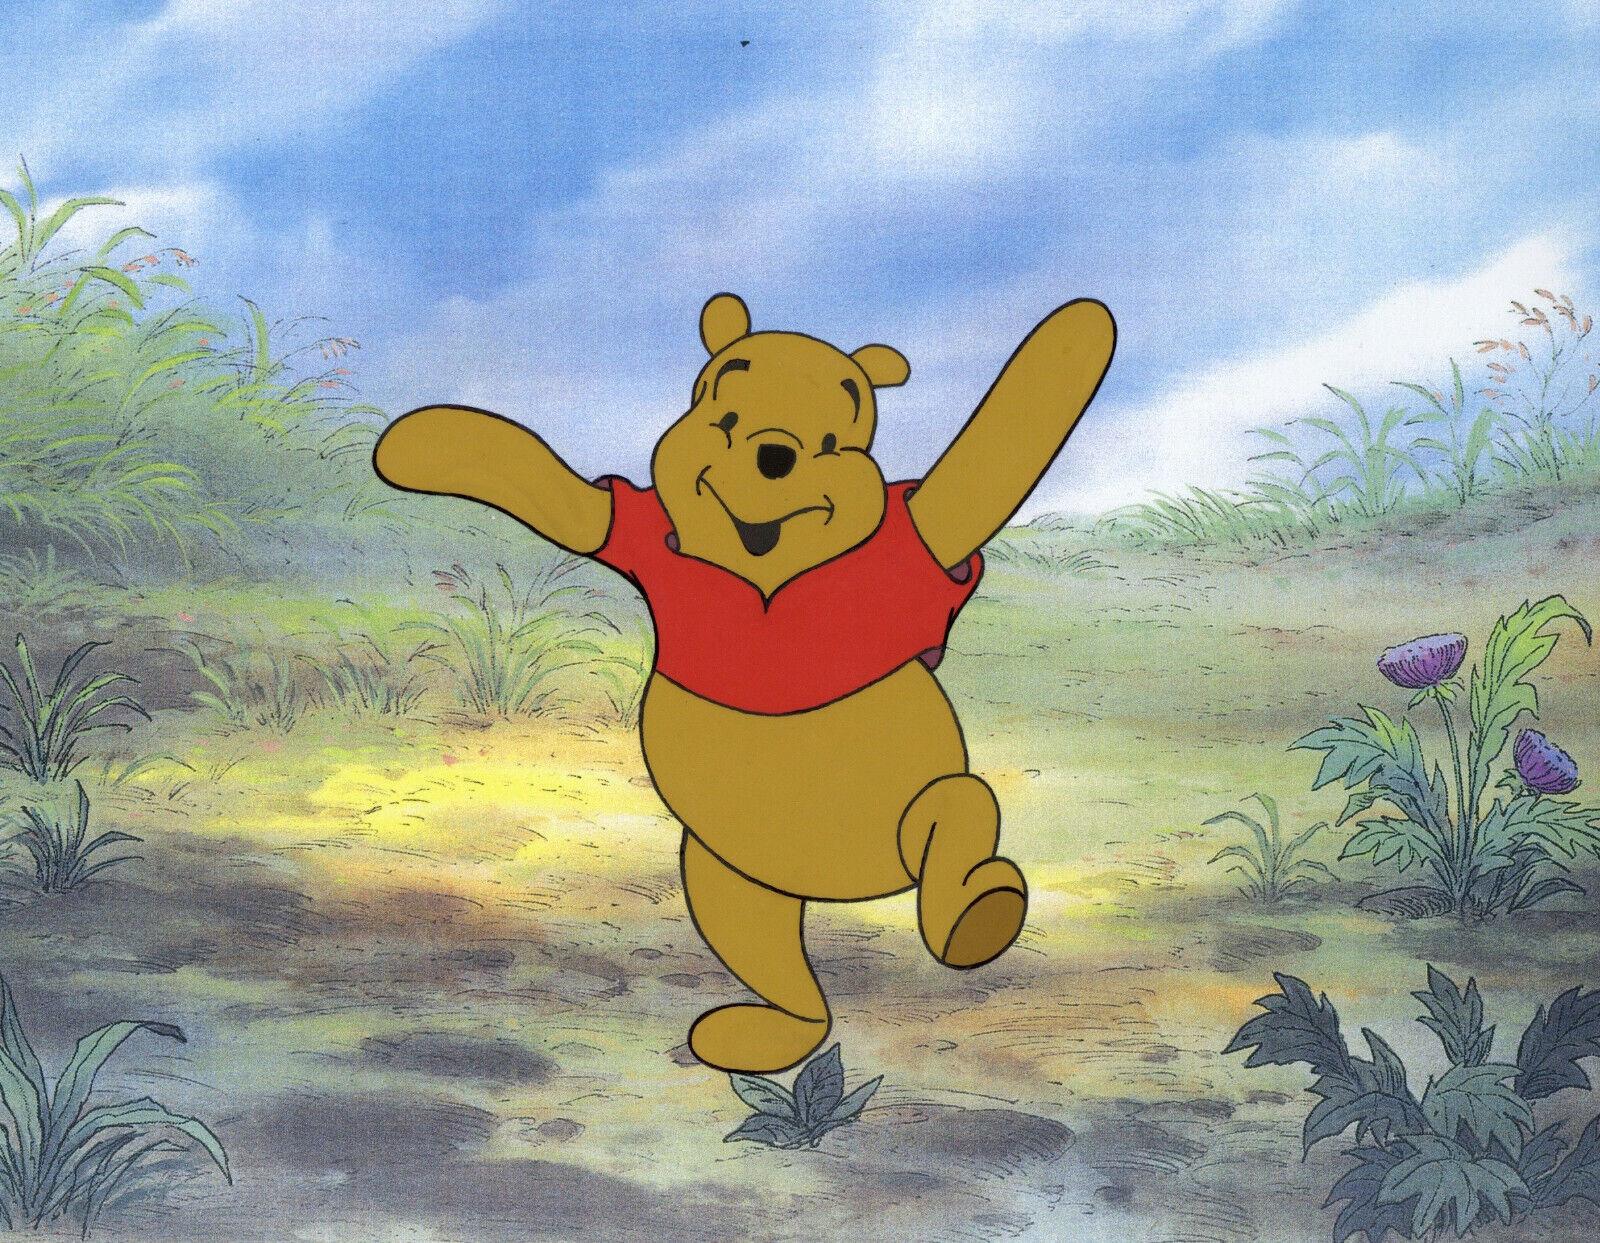 Disney's Winnie the Pooh Original Production Cel: Pooh's Happy Stroll - Art by Walt Disney Studio Artists